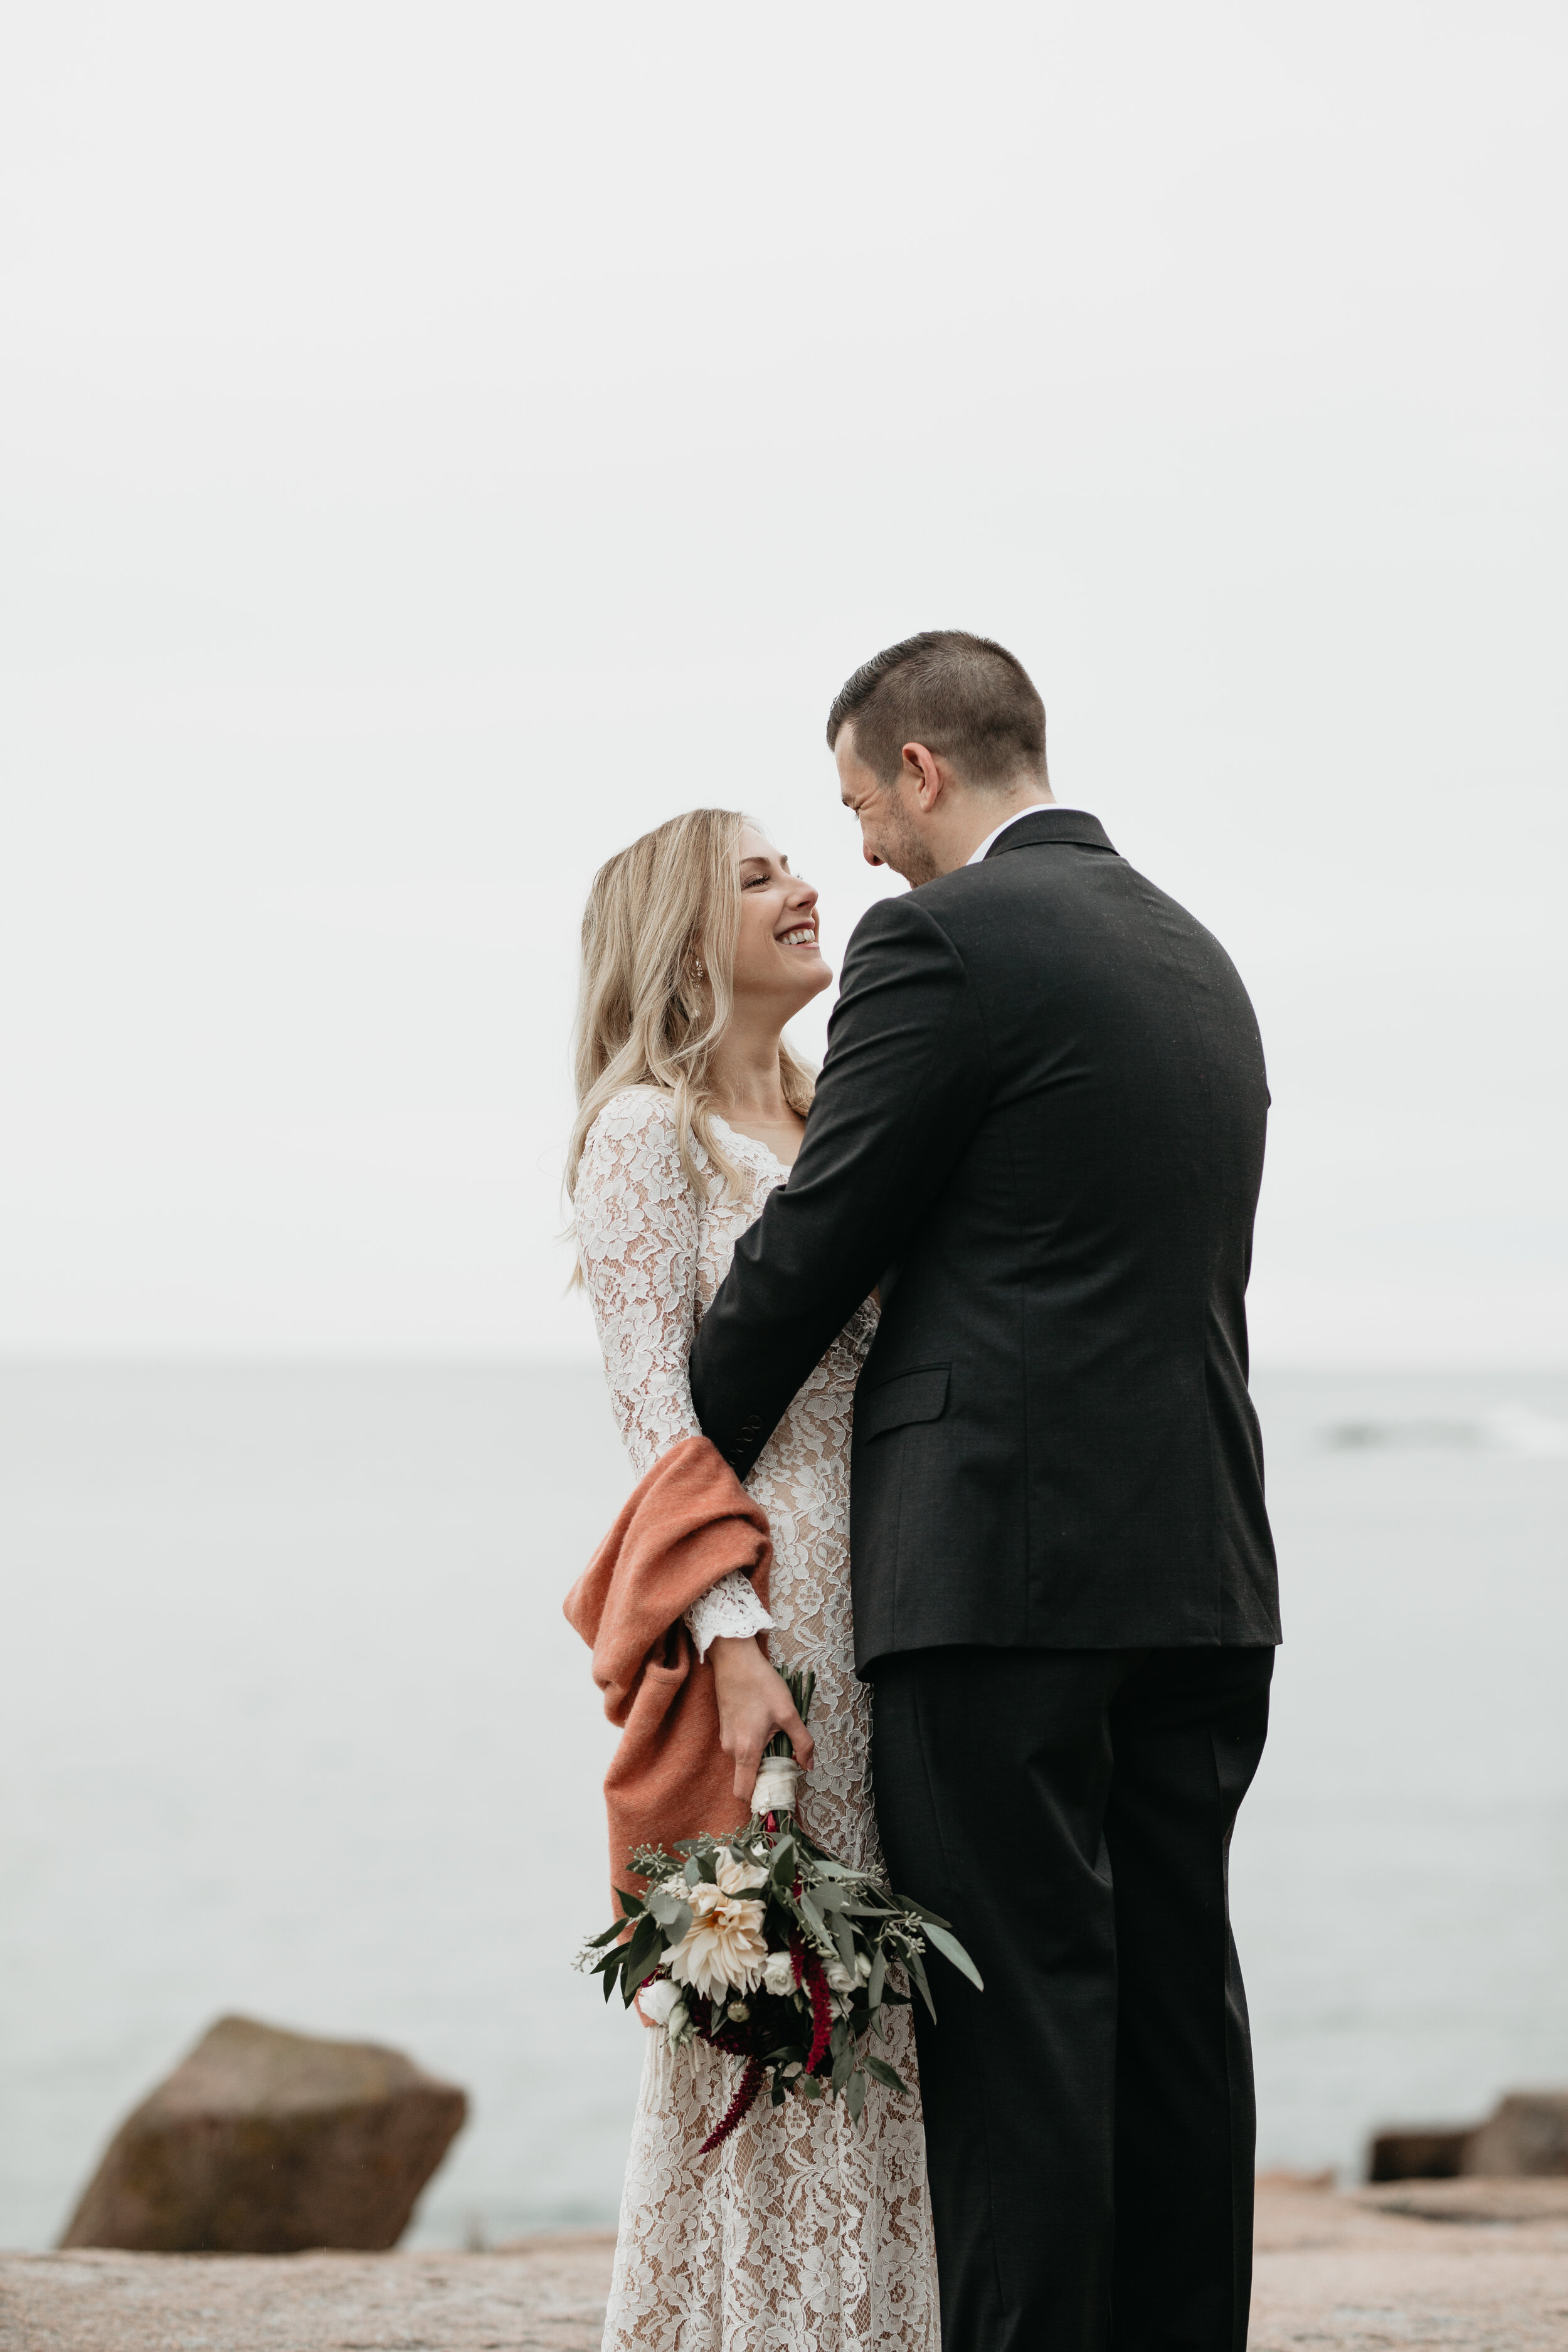 Nicole-Daacke-Photography-Acadia-national-park-elopement-photography-elopement-in-acadia-inspiration-maine-intimate-wedding-destination-elopement-photographer-rainy-day-maine-coast-bar-harbor-elopement-photography-149.jpg